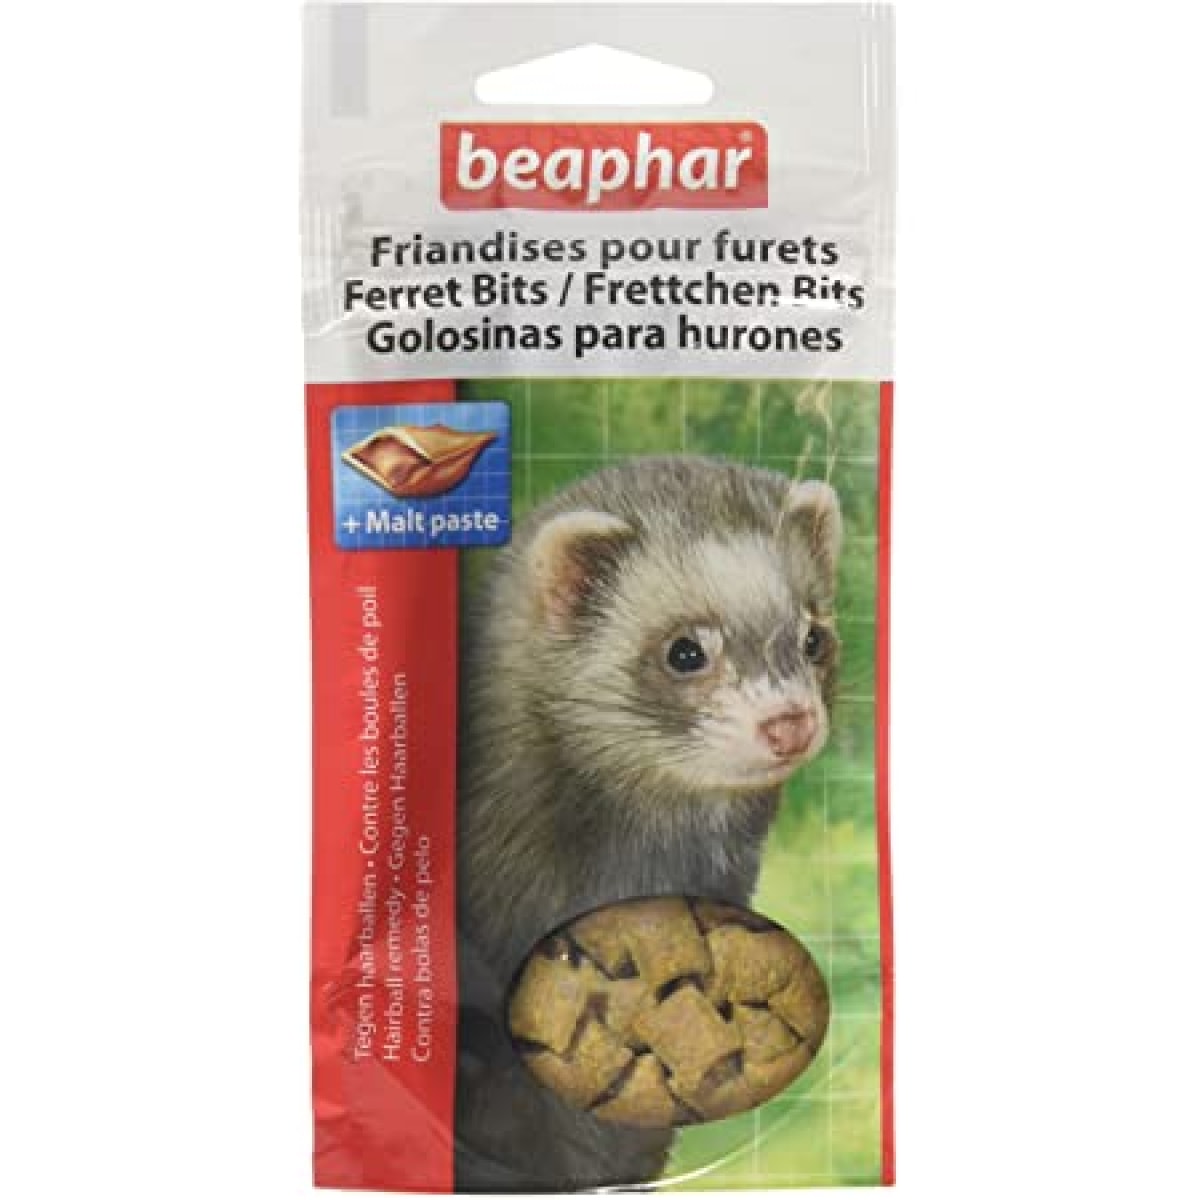 Beaphar – Ferret Bits 35g – Pawfect Supplies Ltd Product Image